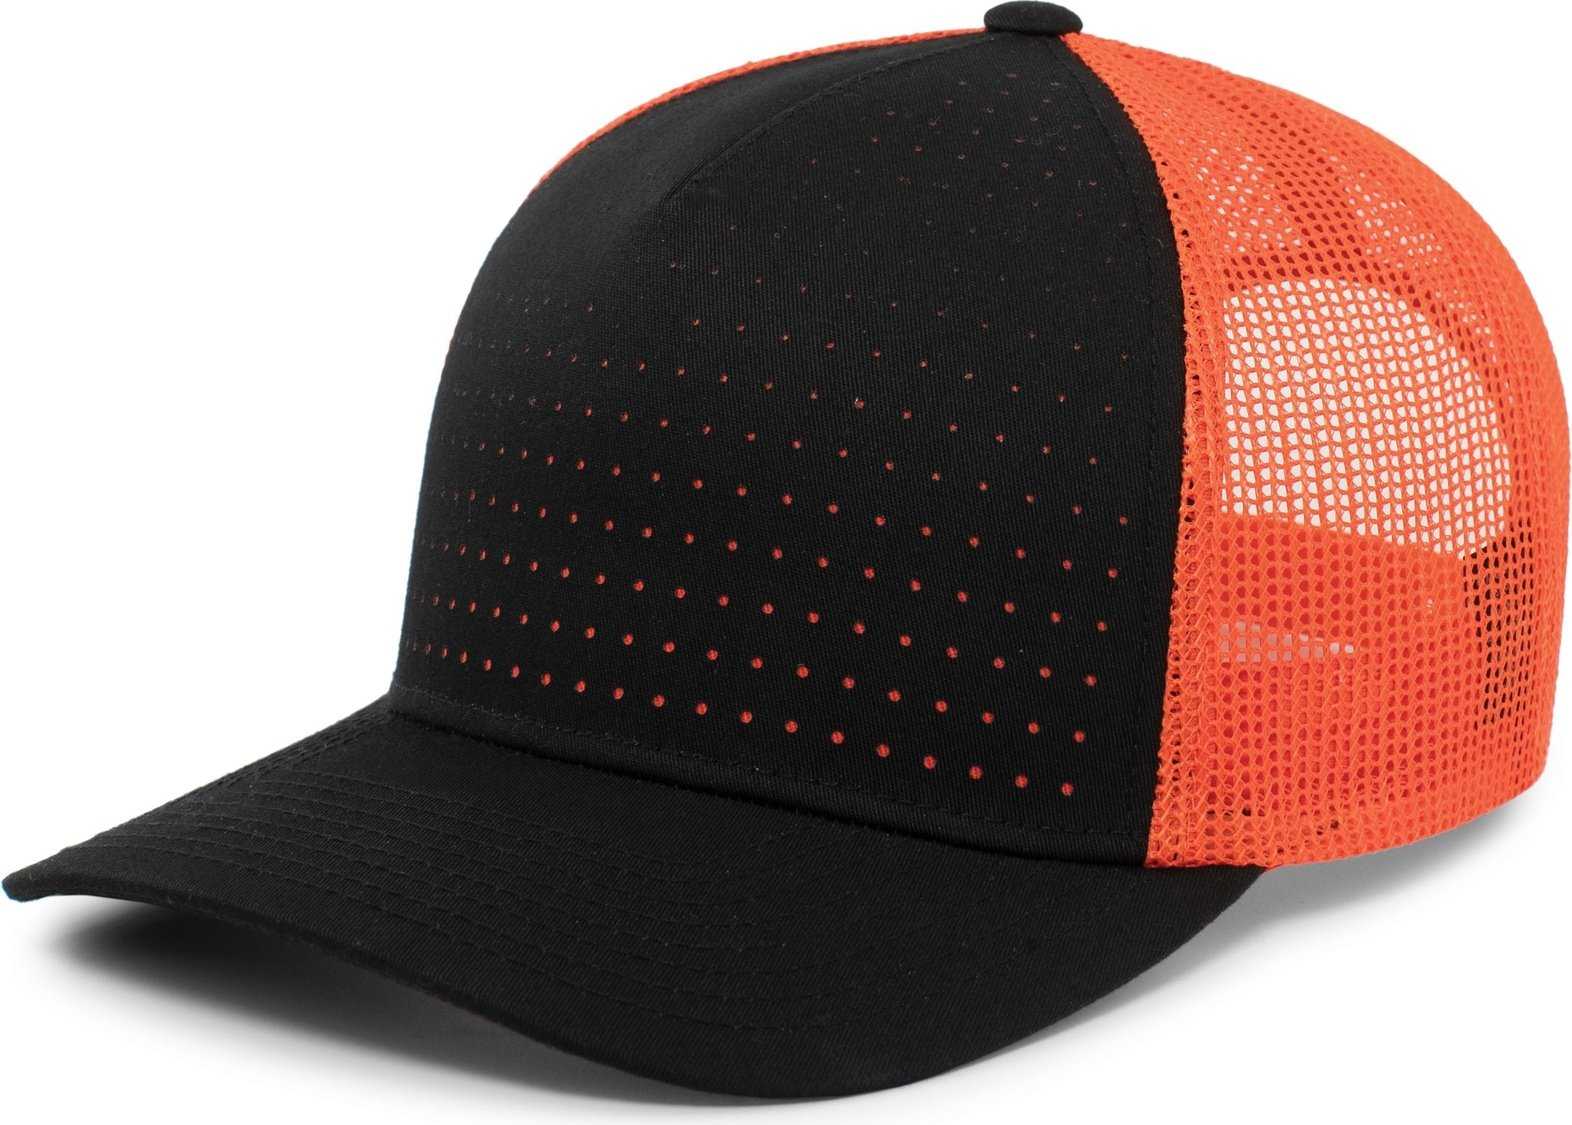 Pacific Headwear 105P Perforated 5 Panel Trucker Snapback Cap - Black Orange Black - HIT a Double